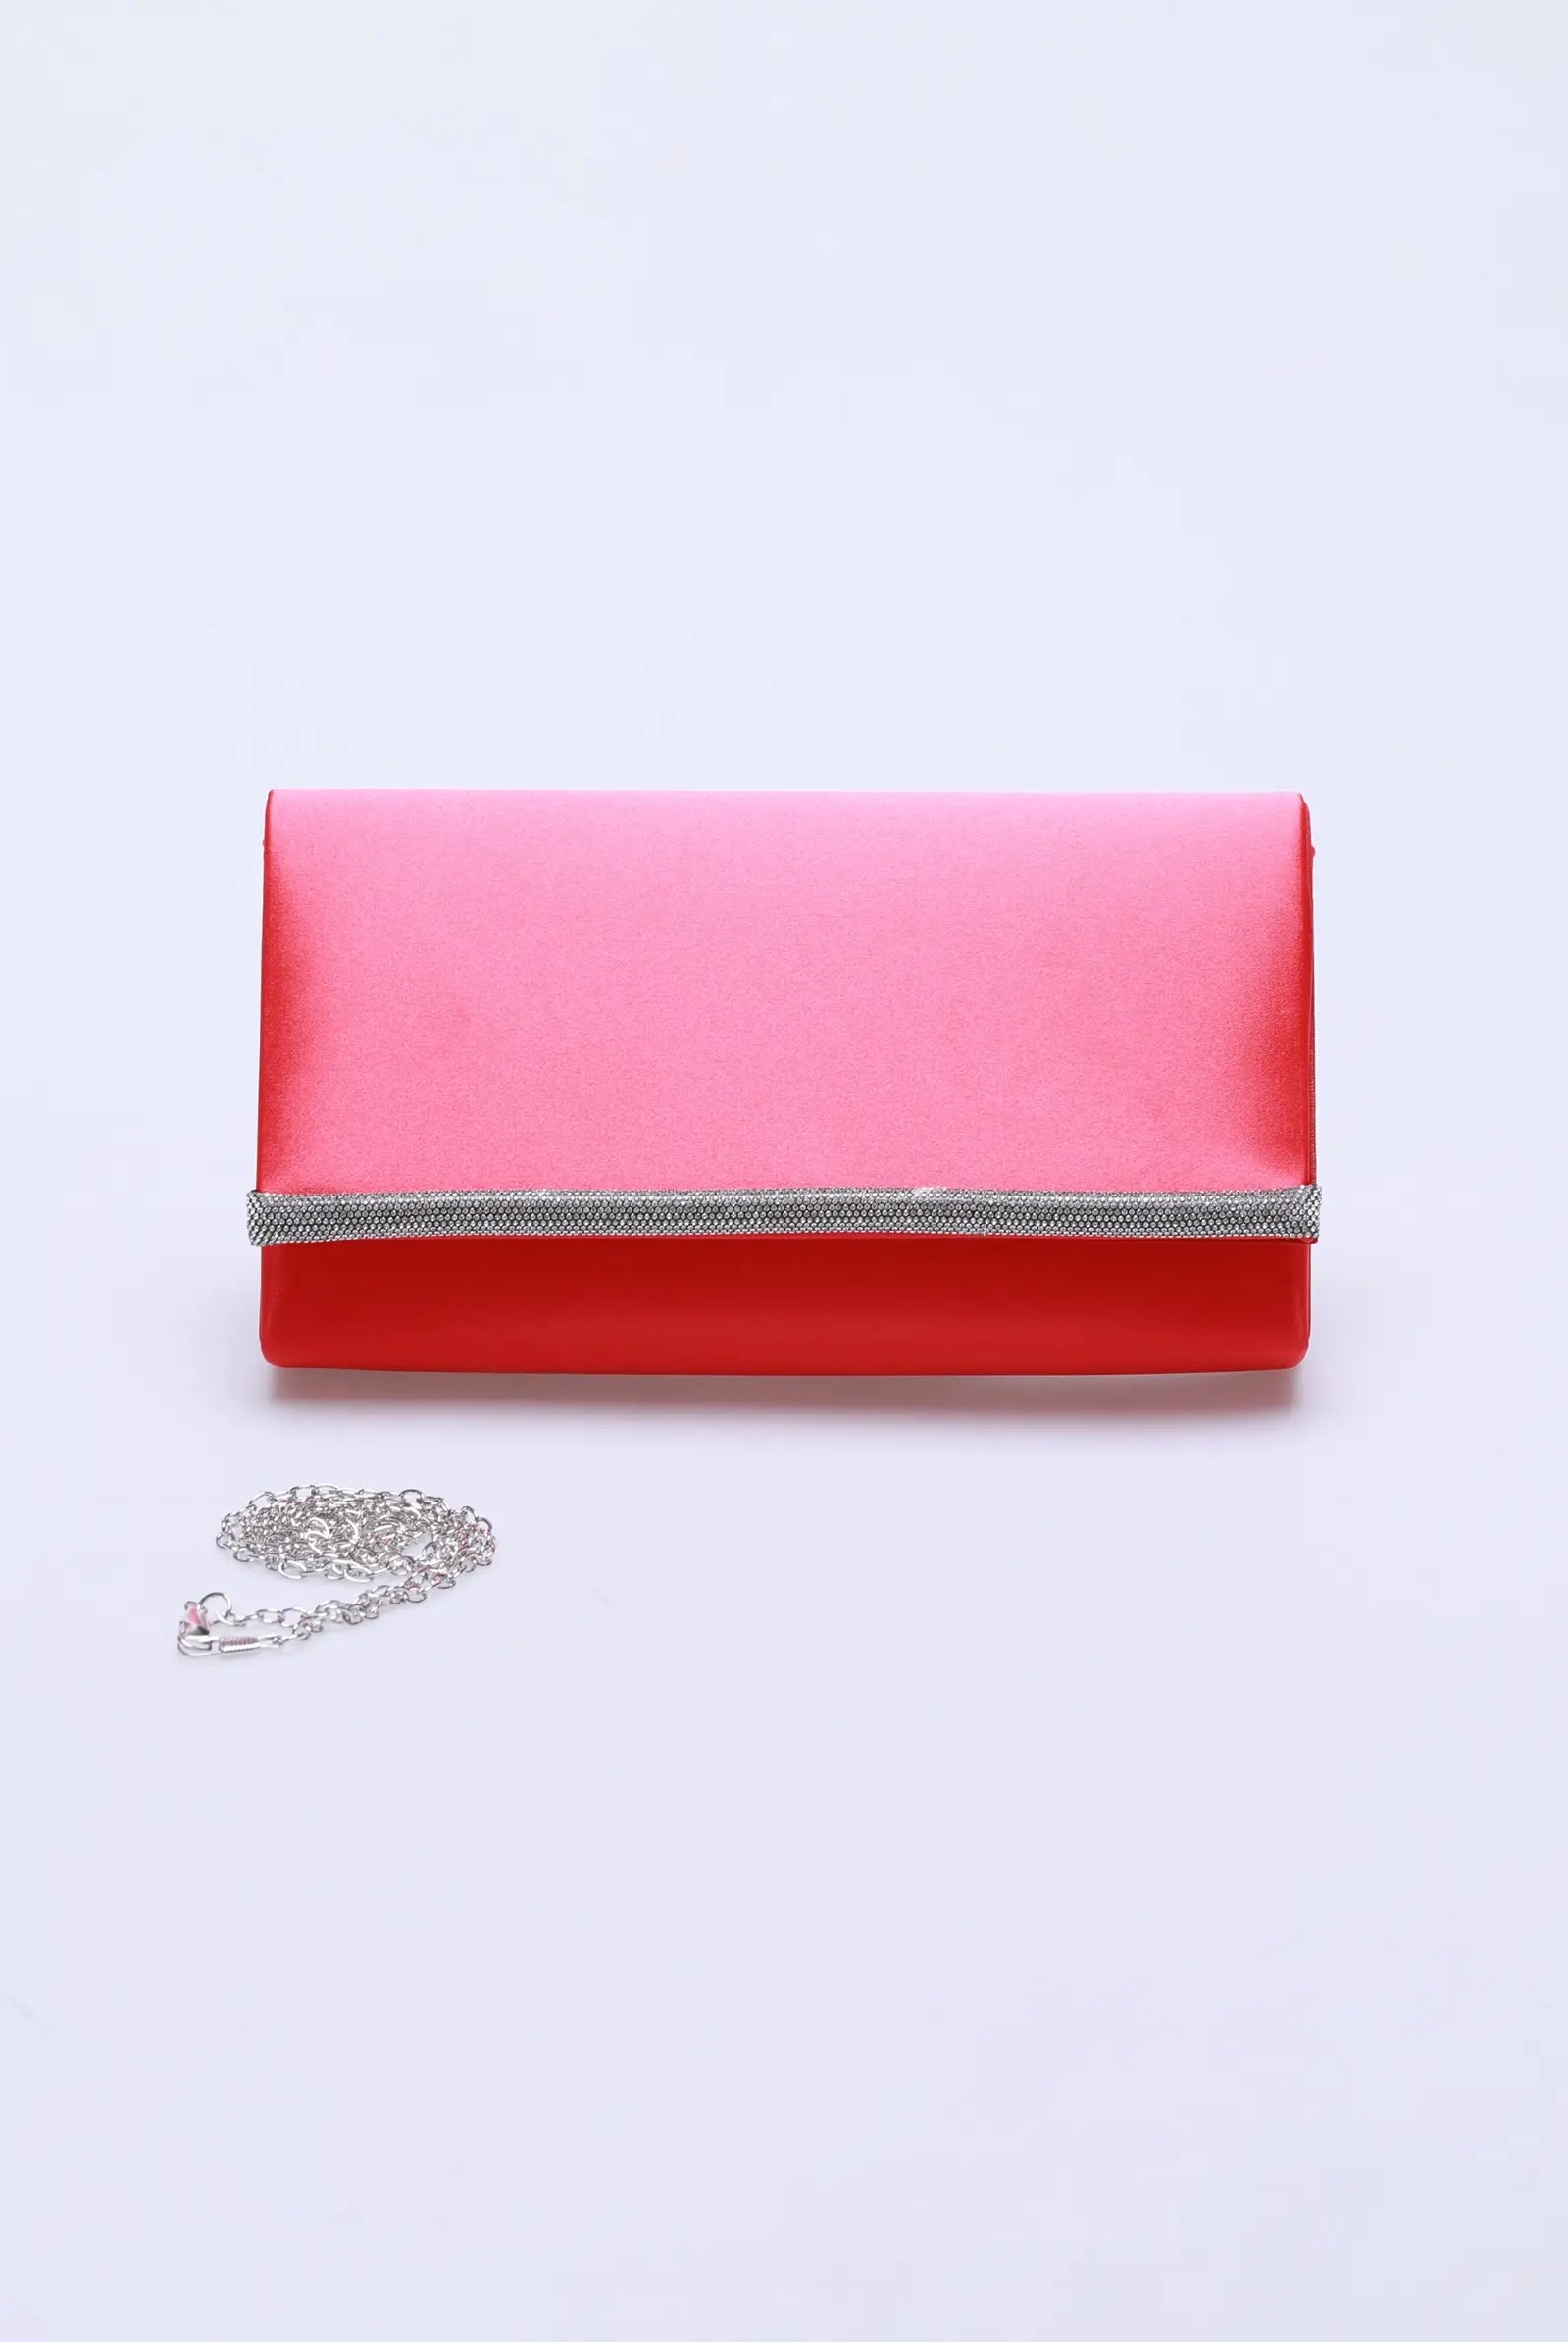 Diamente Detailed Flap Red Clutch Bag